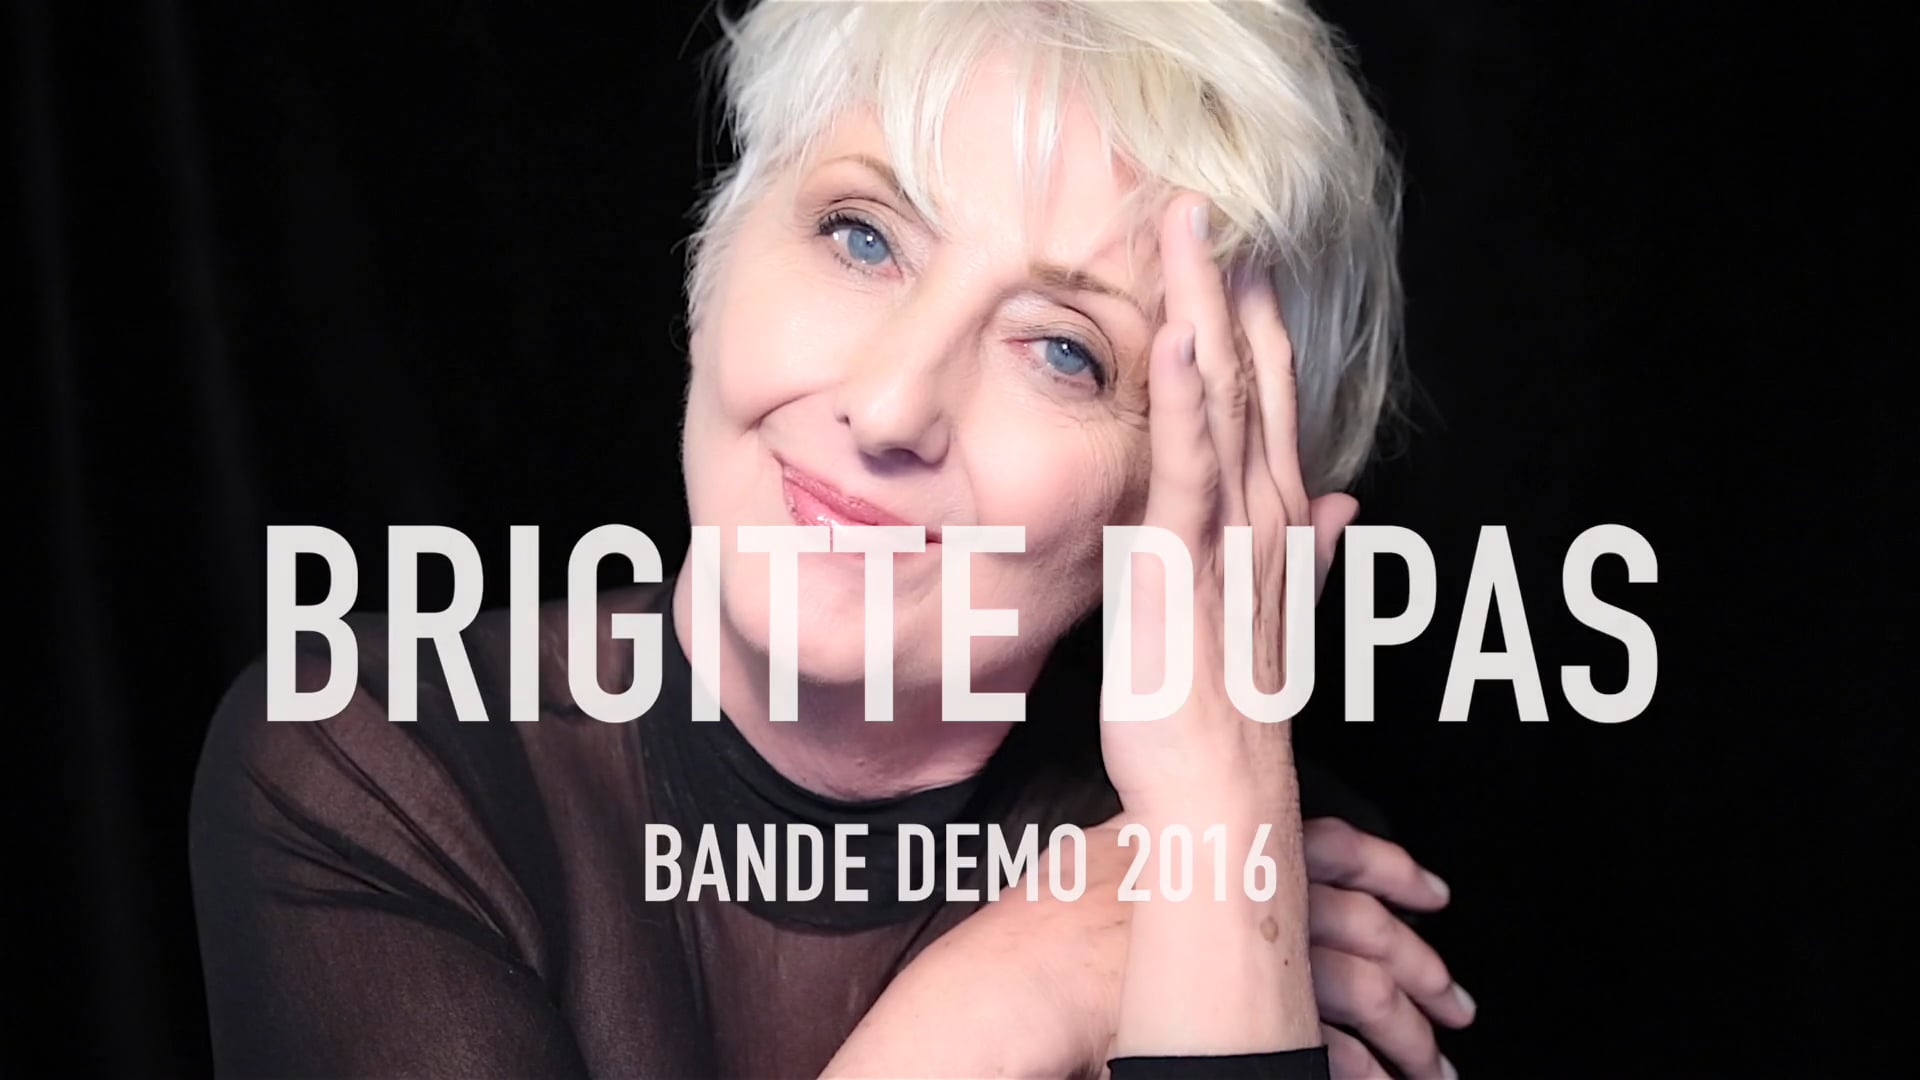 BANDE DEMO BRIGITTE DUPAS 2016 on Vimeo